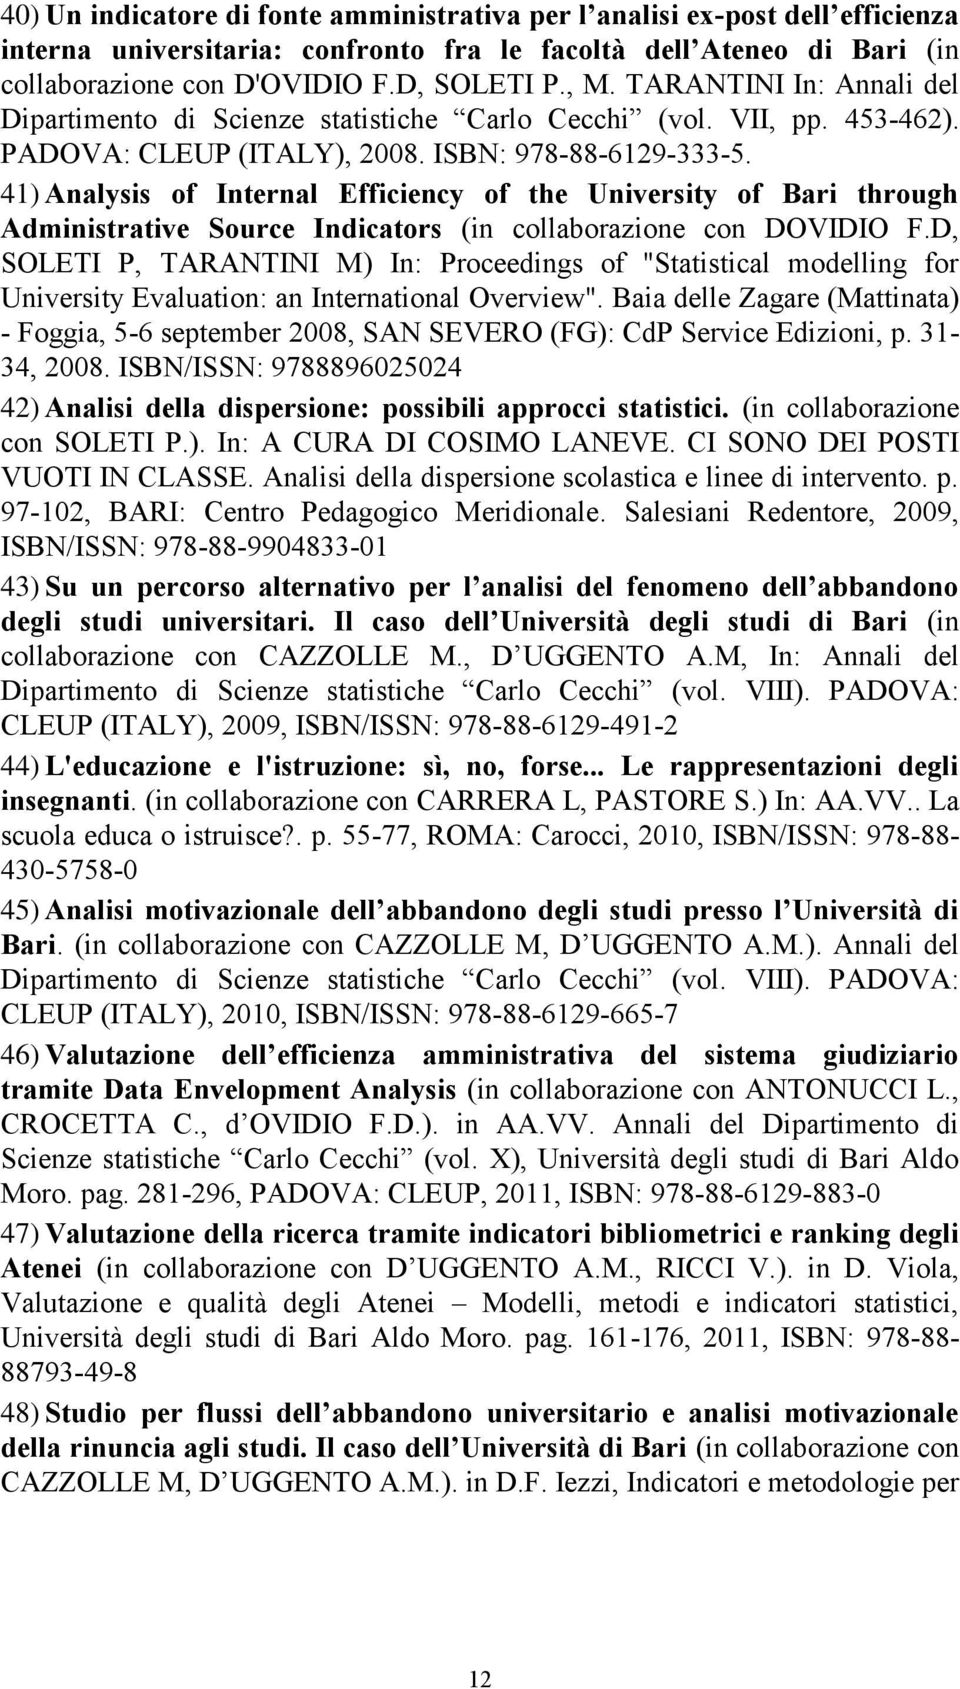 41) Analysis of Internal Efficiency of the University of Bari through Administrative Source Indicators (in collaborazione con DOVIDIO F.